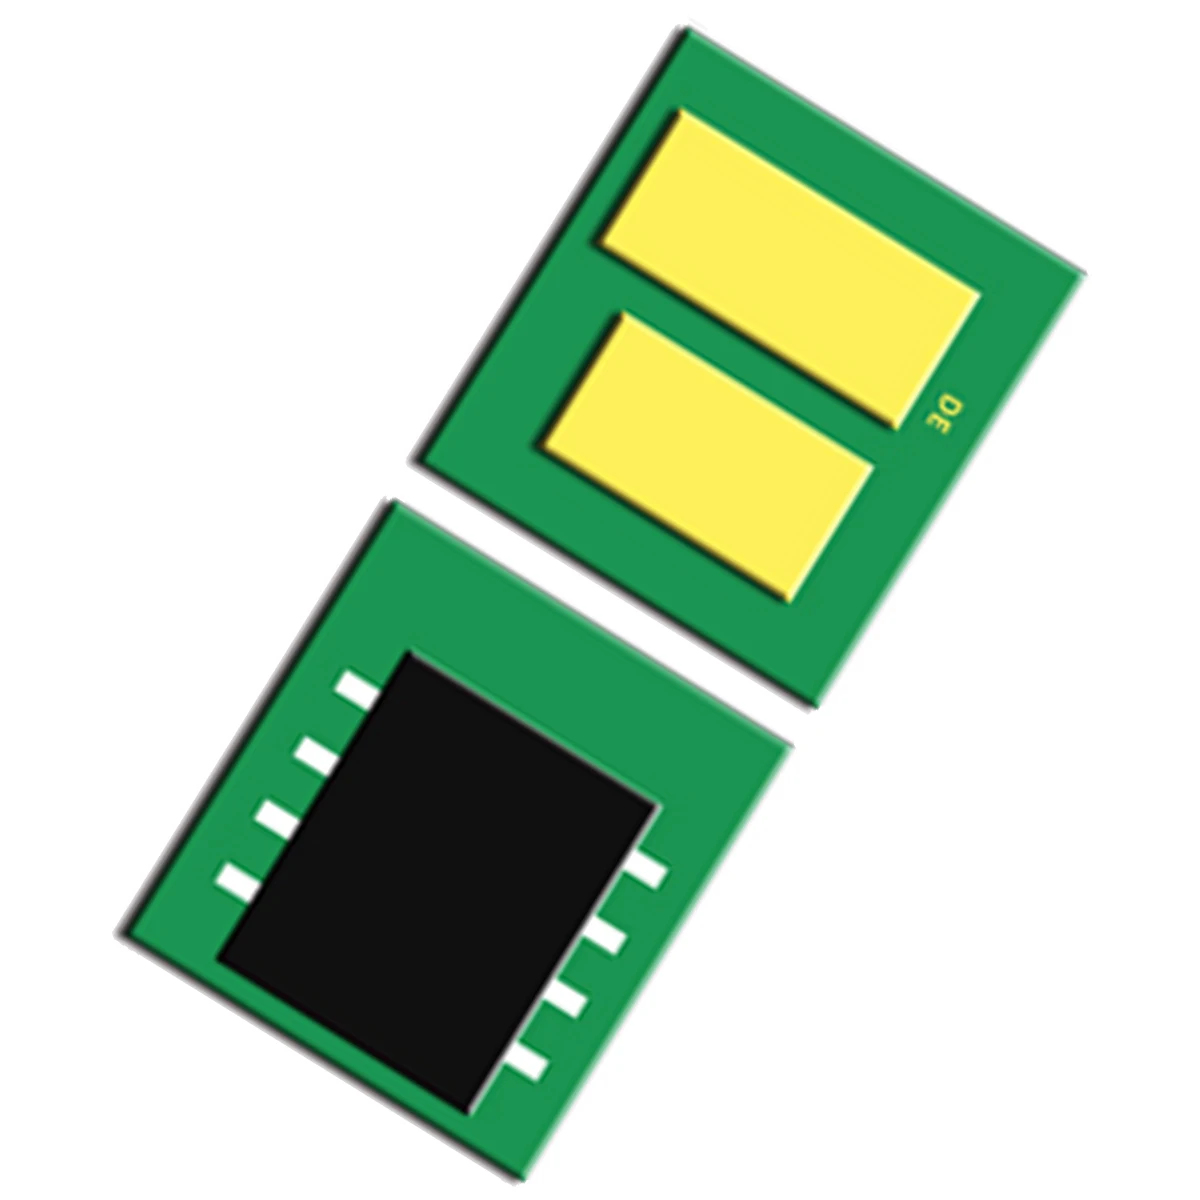 Toner Chip for HP LaserJet Enterprise M507 M507dn M507dng M507n M507x M528 M528dn M528f M528c M528z CF289A 89A CF289X 89X CF289Y